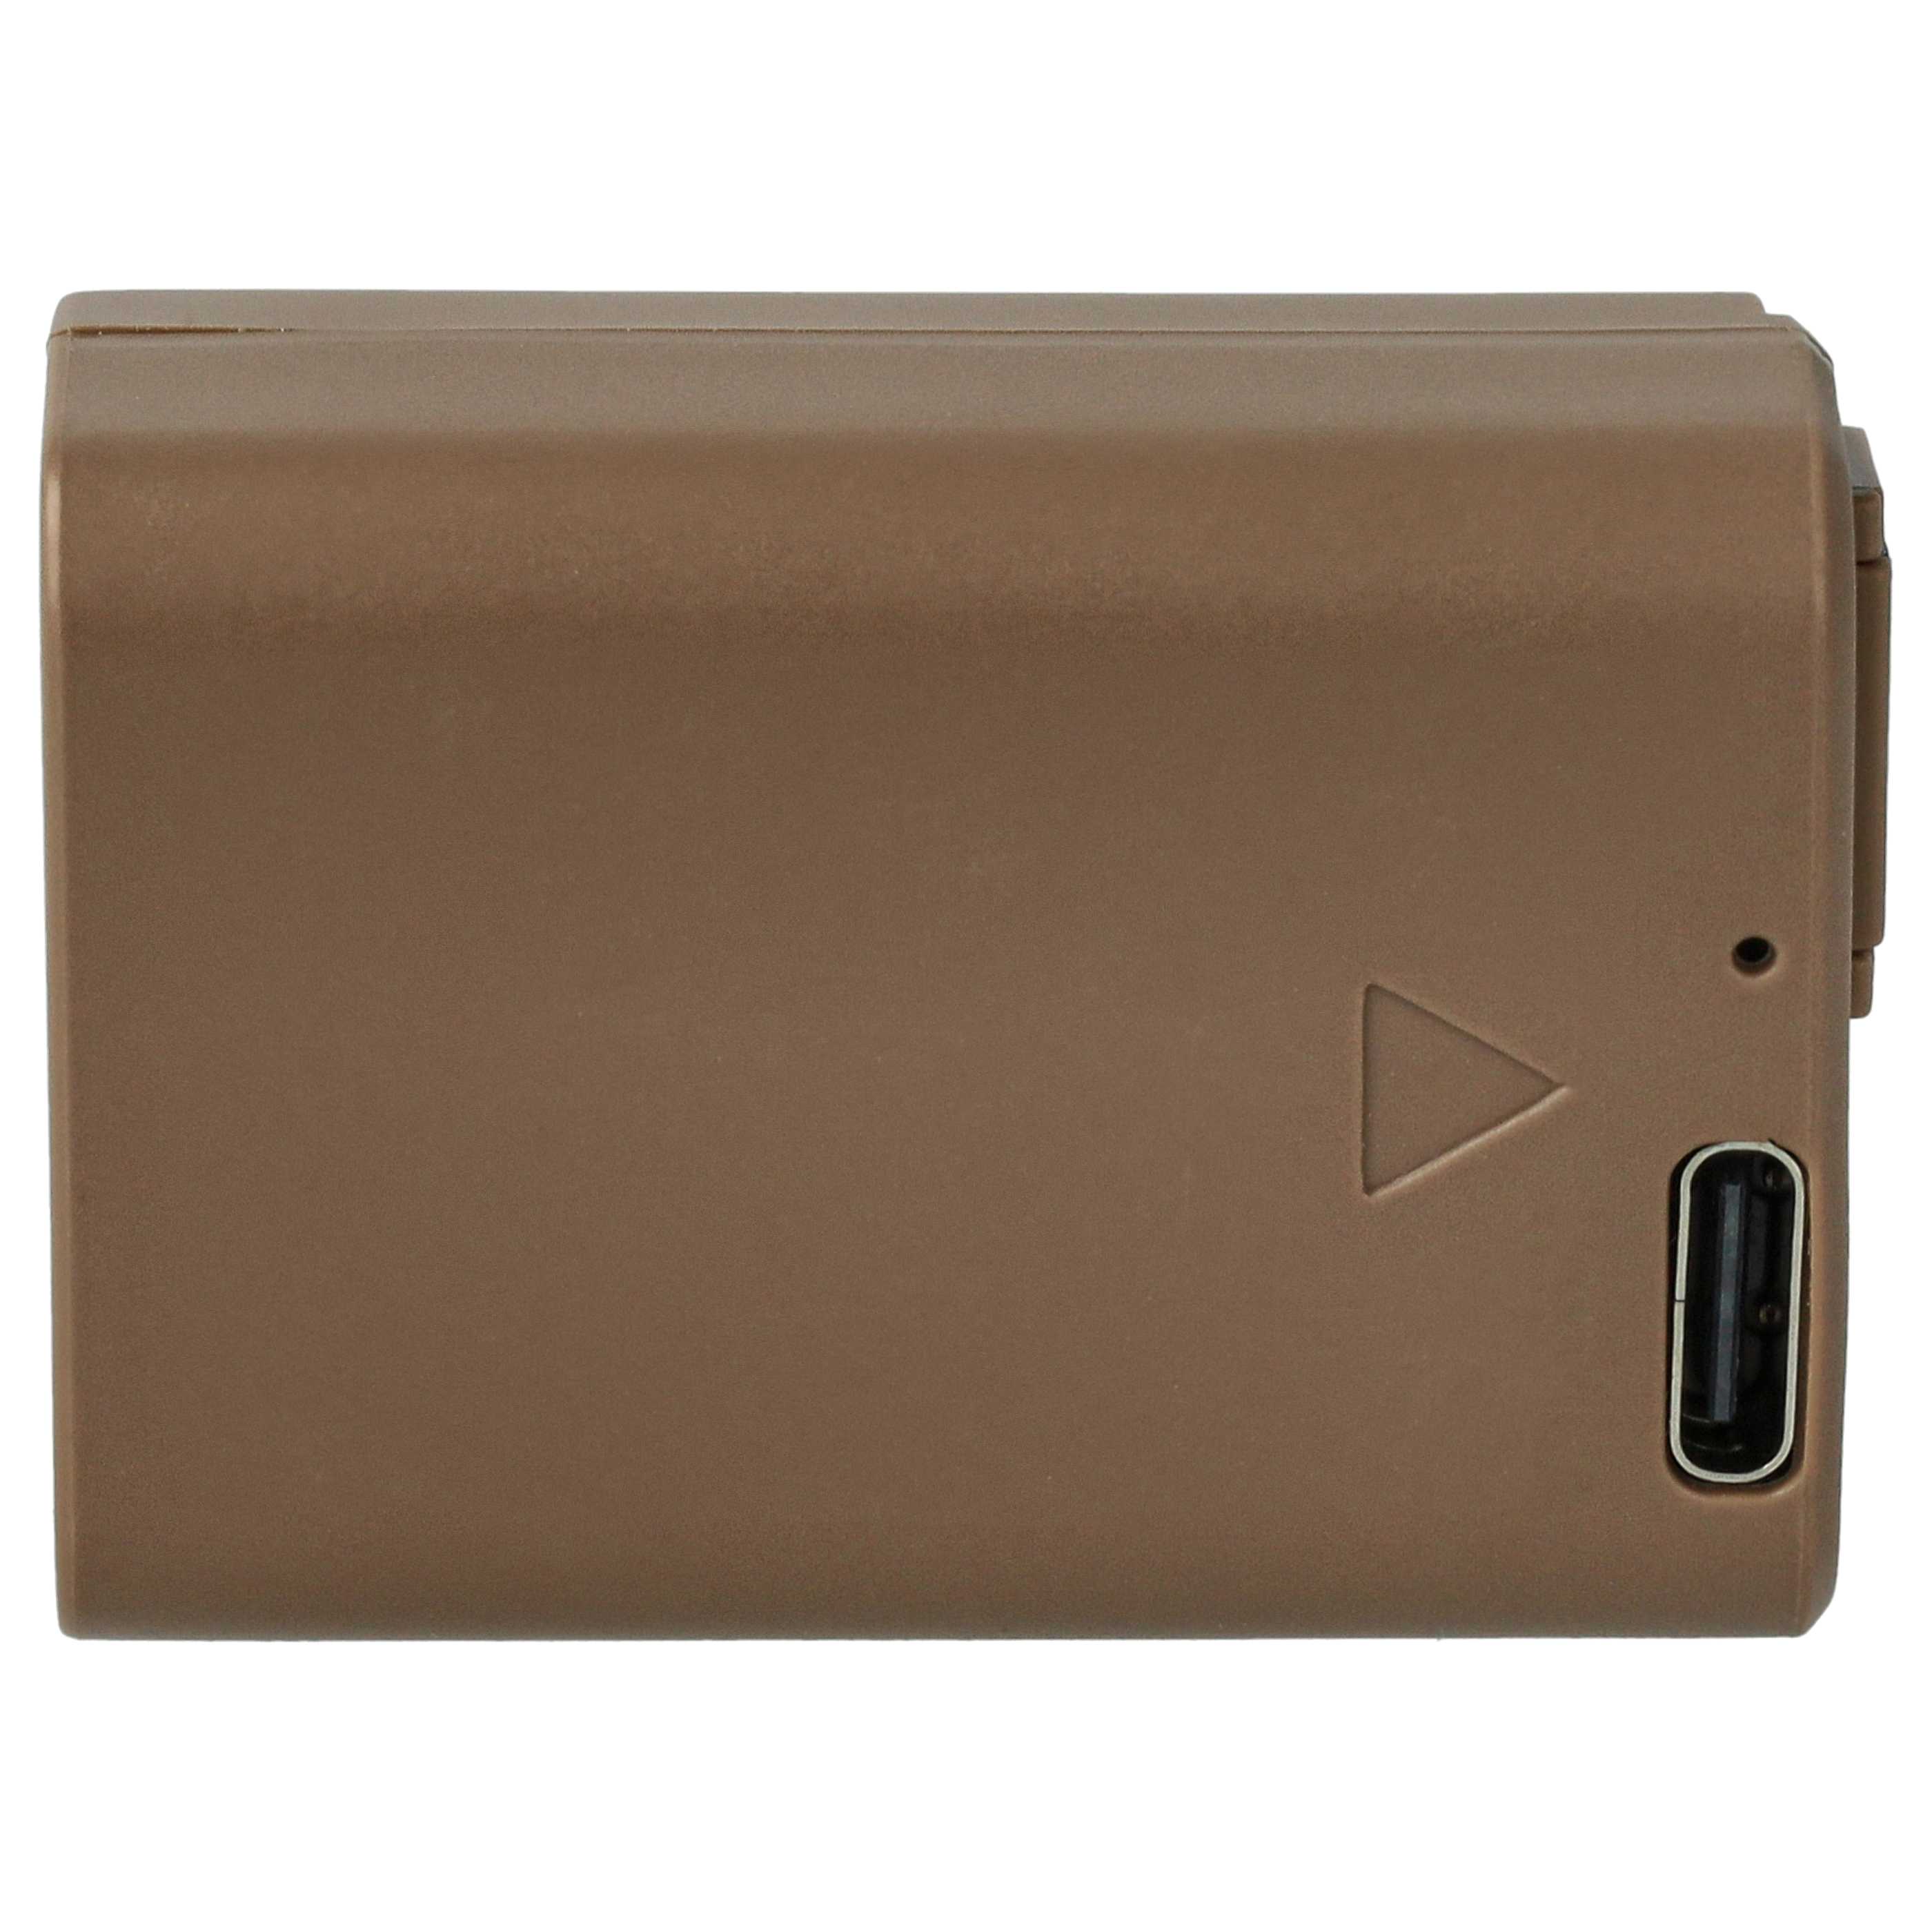 Batteria sostituisce Sony NP-FW50 per fotocamera Sony - 900mAh 7,4V Li-Ion + chip + presa USB-C